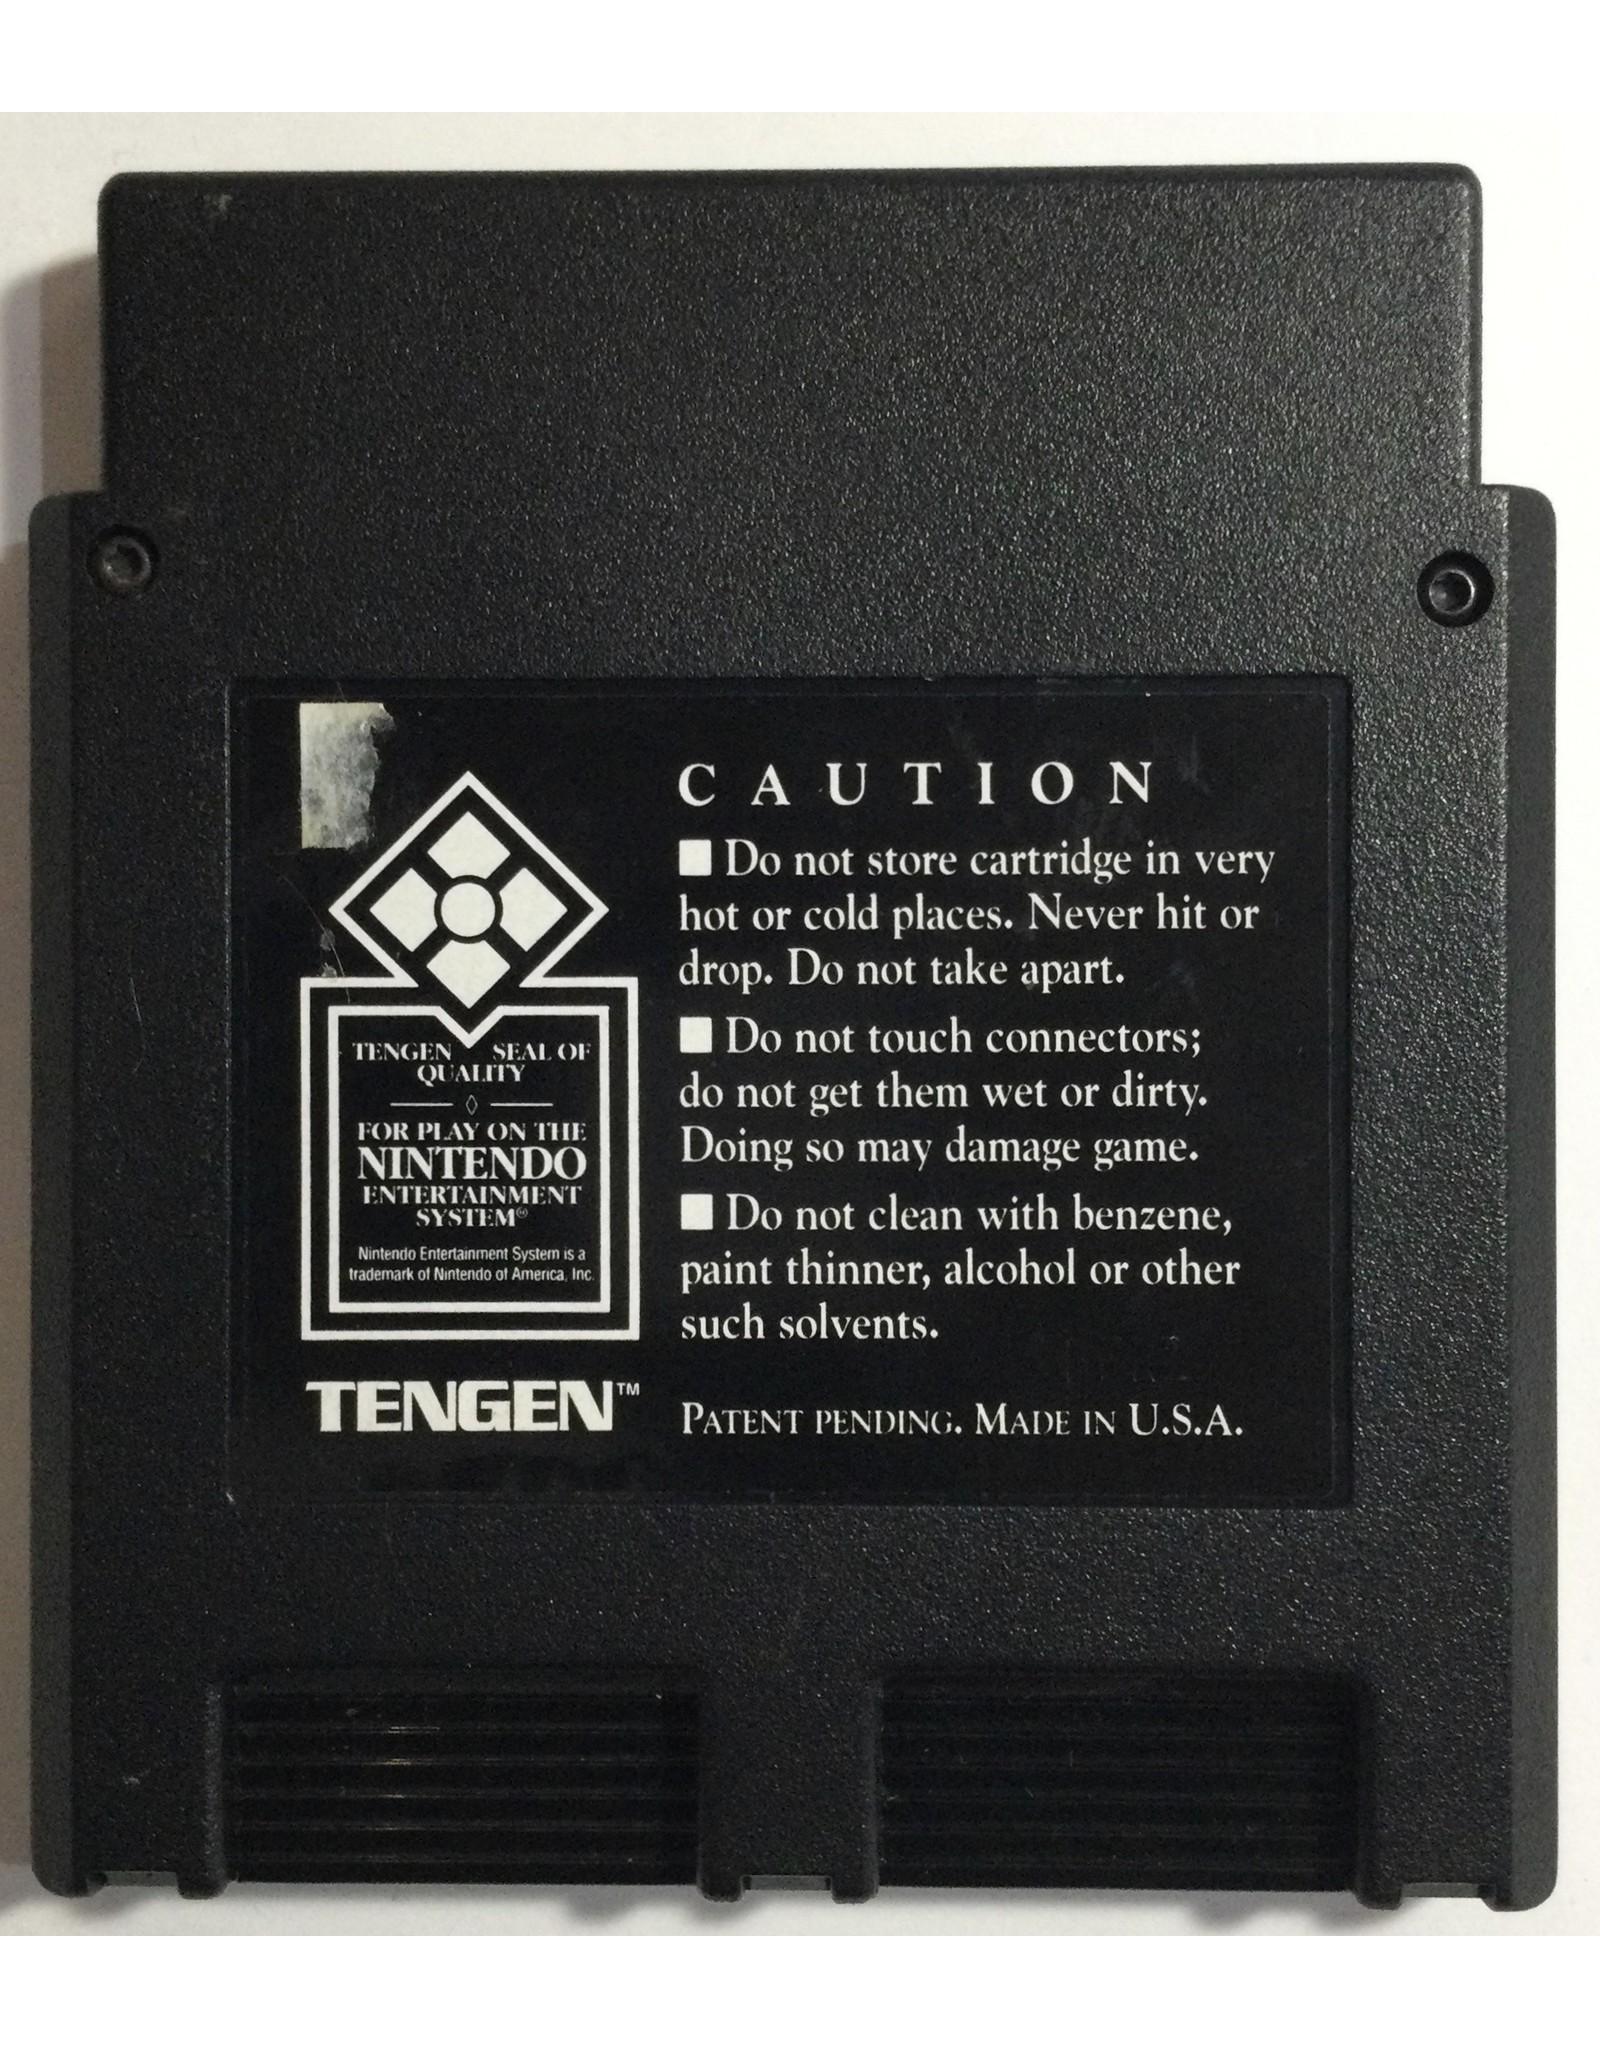 TENGEN PAC-MANIA for Nintendo Entertainment System (NES)